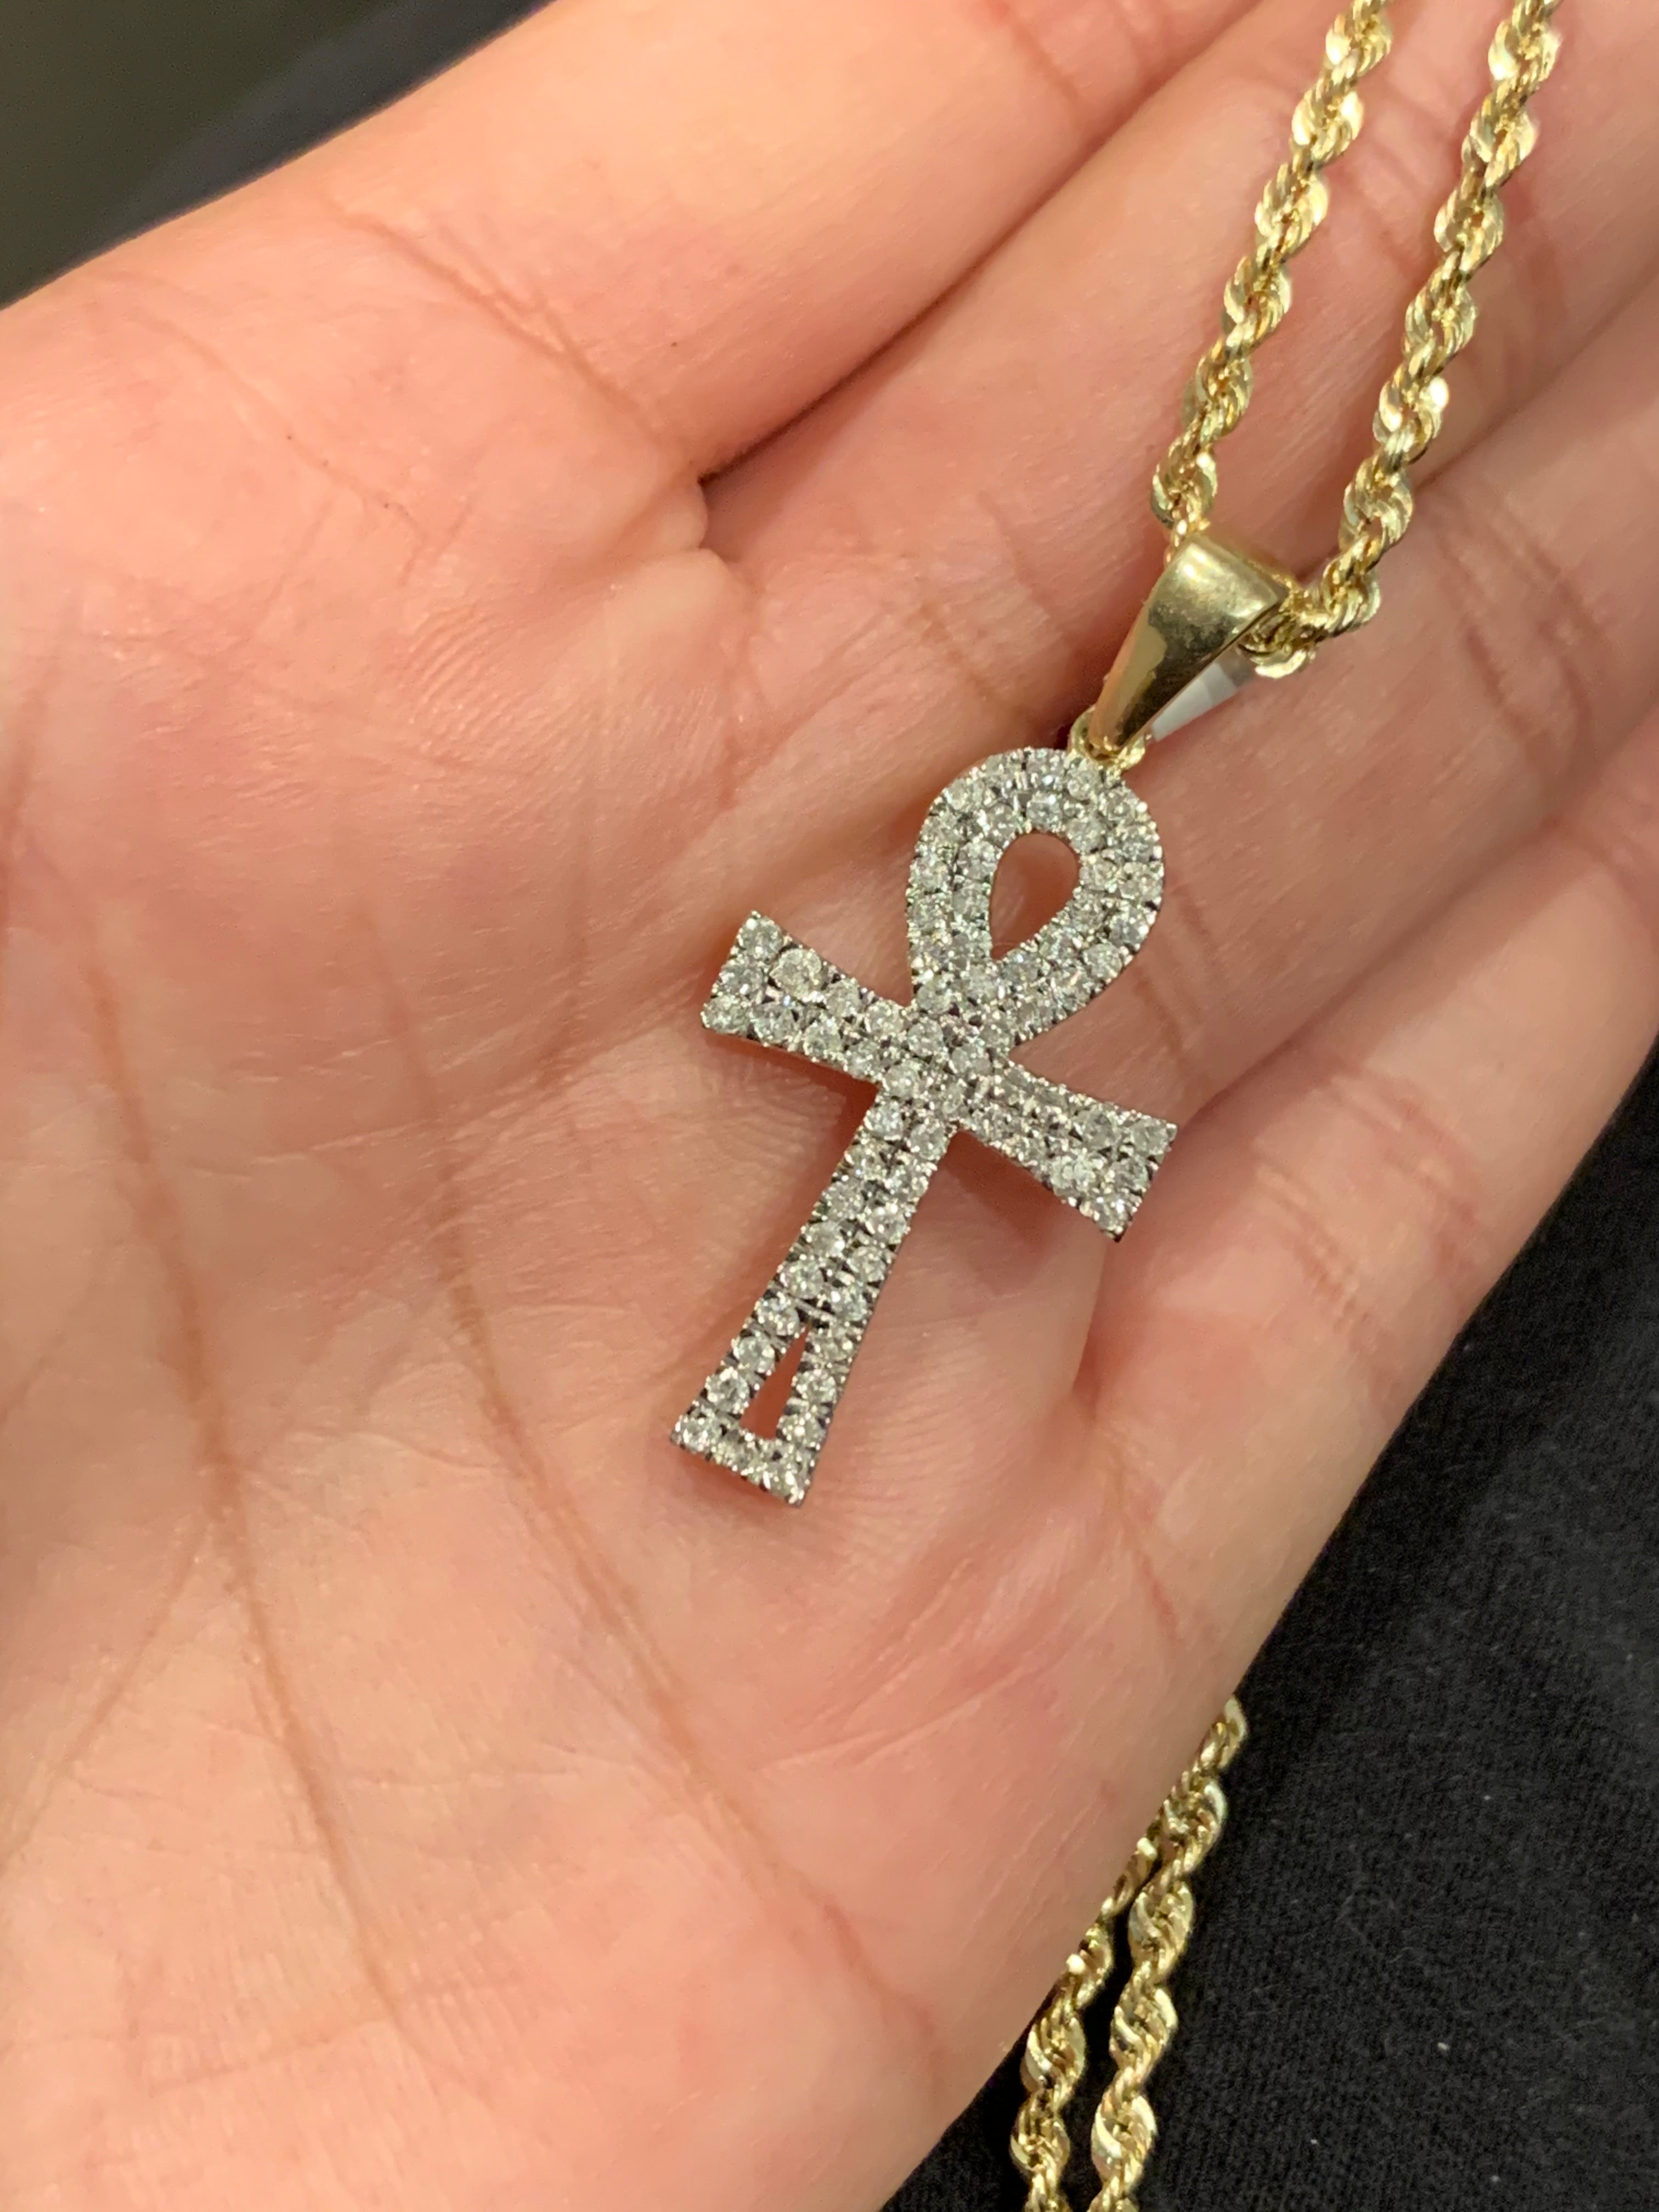 Diamond Ankh Cross Necklace Pendant & Tennis Chain |The Gold Gods